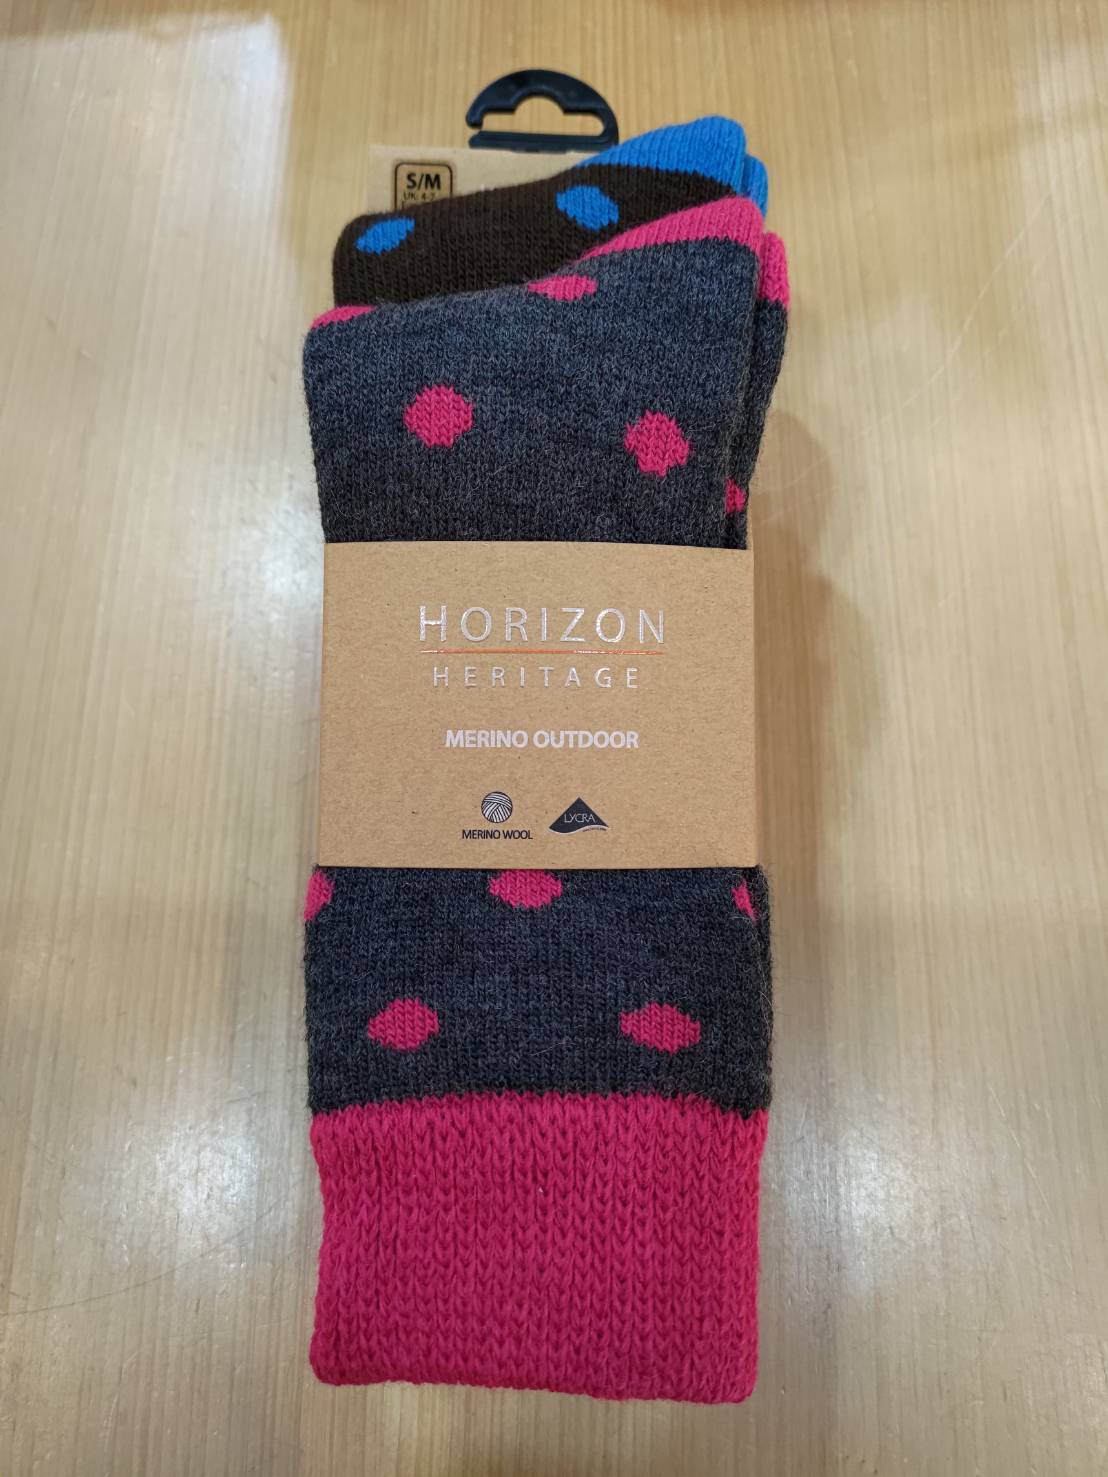 英國《HORIZON》 HERITAGE MERINO OUTDOOR 2PK 羊毛保暖機能襪 2雙套裝組